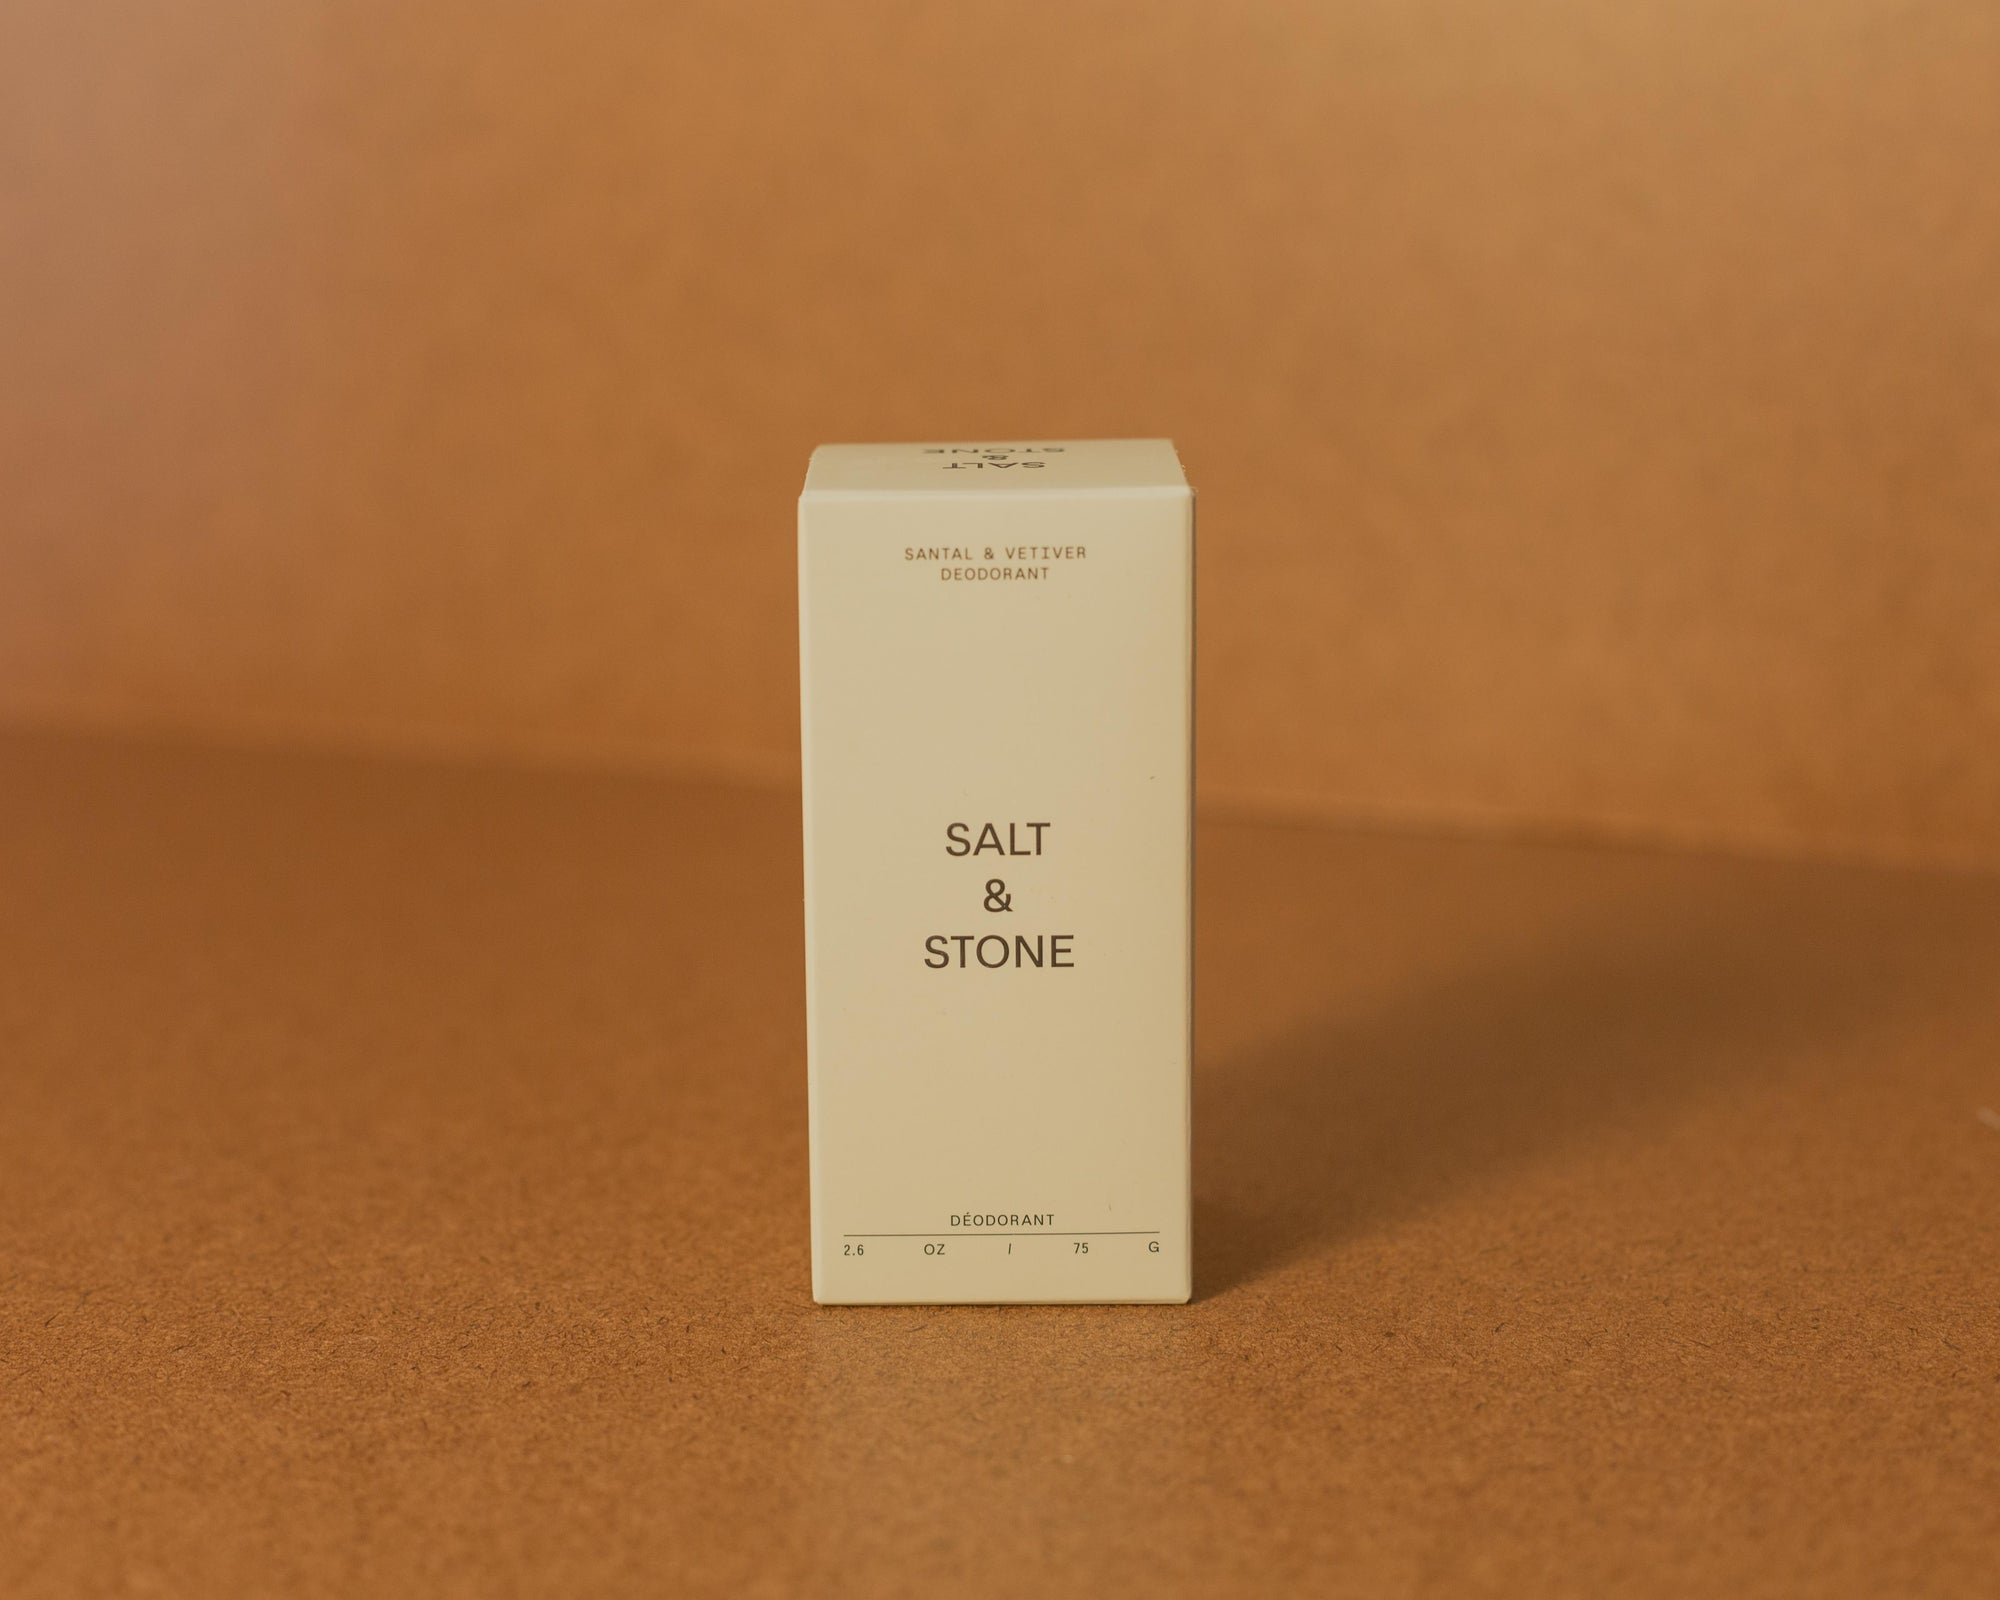 Salt and Stone Deodorant - Santal & Vetiver box front view